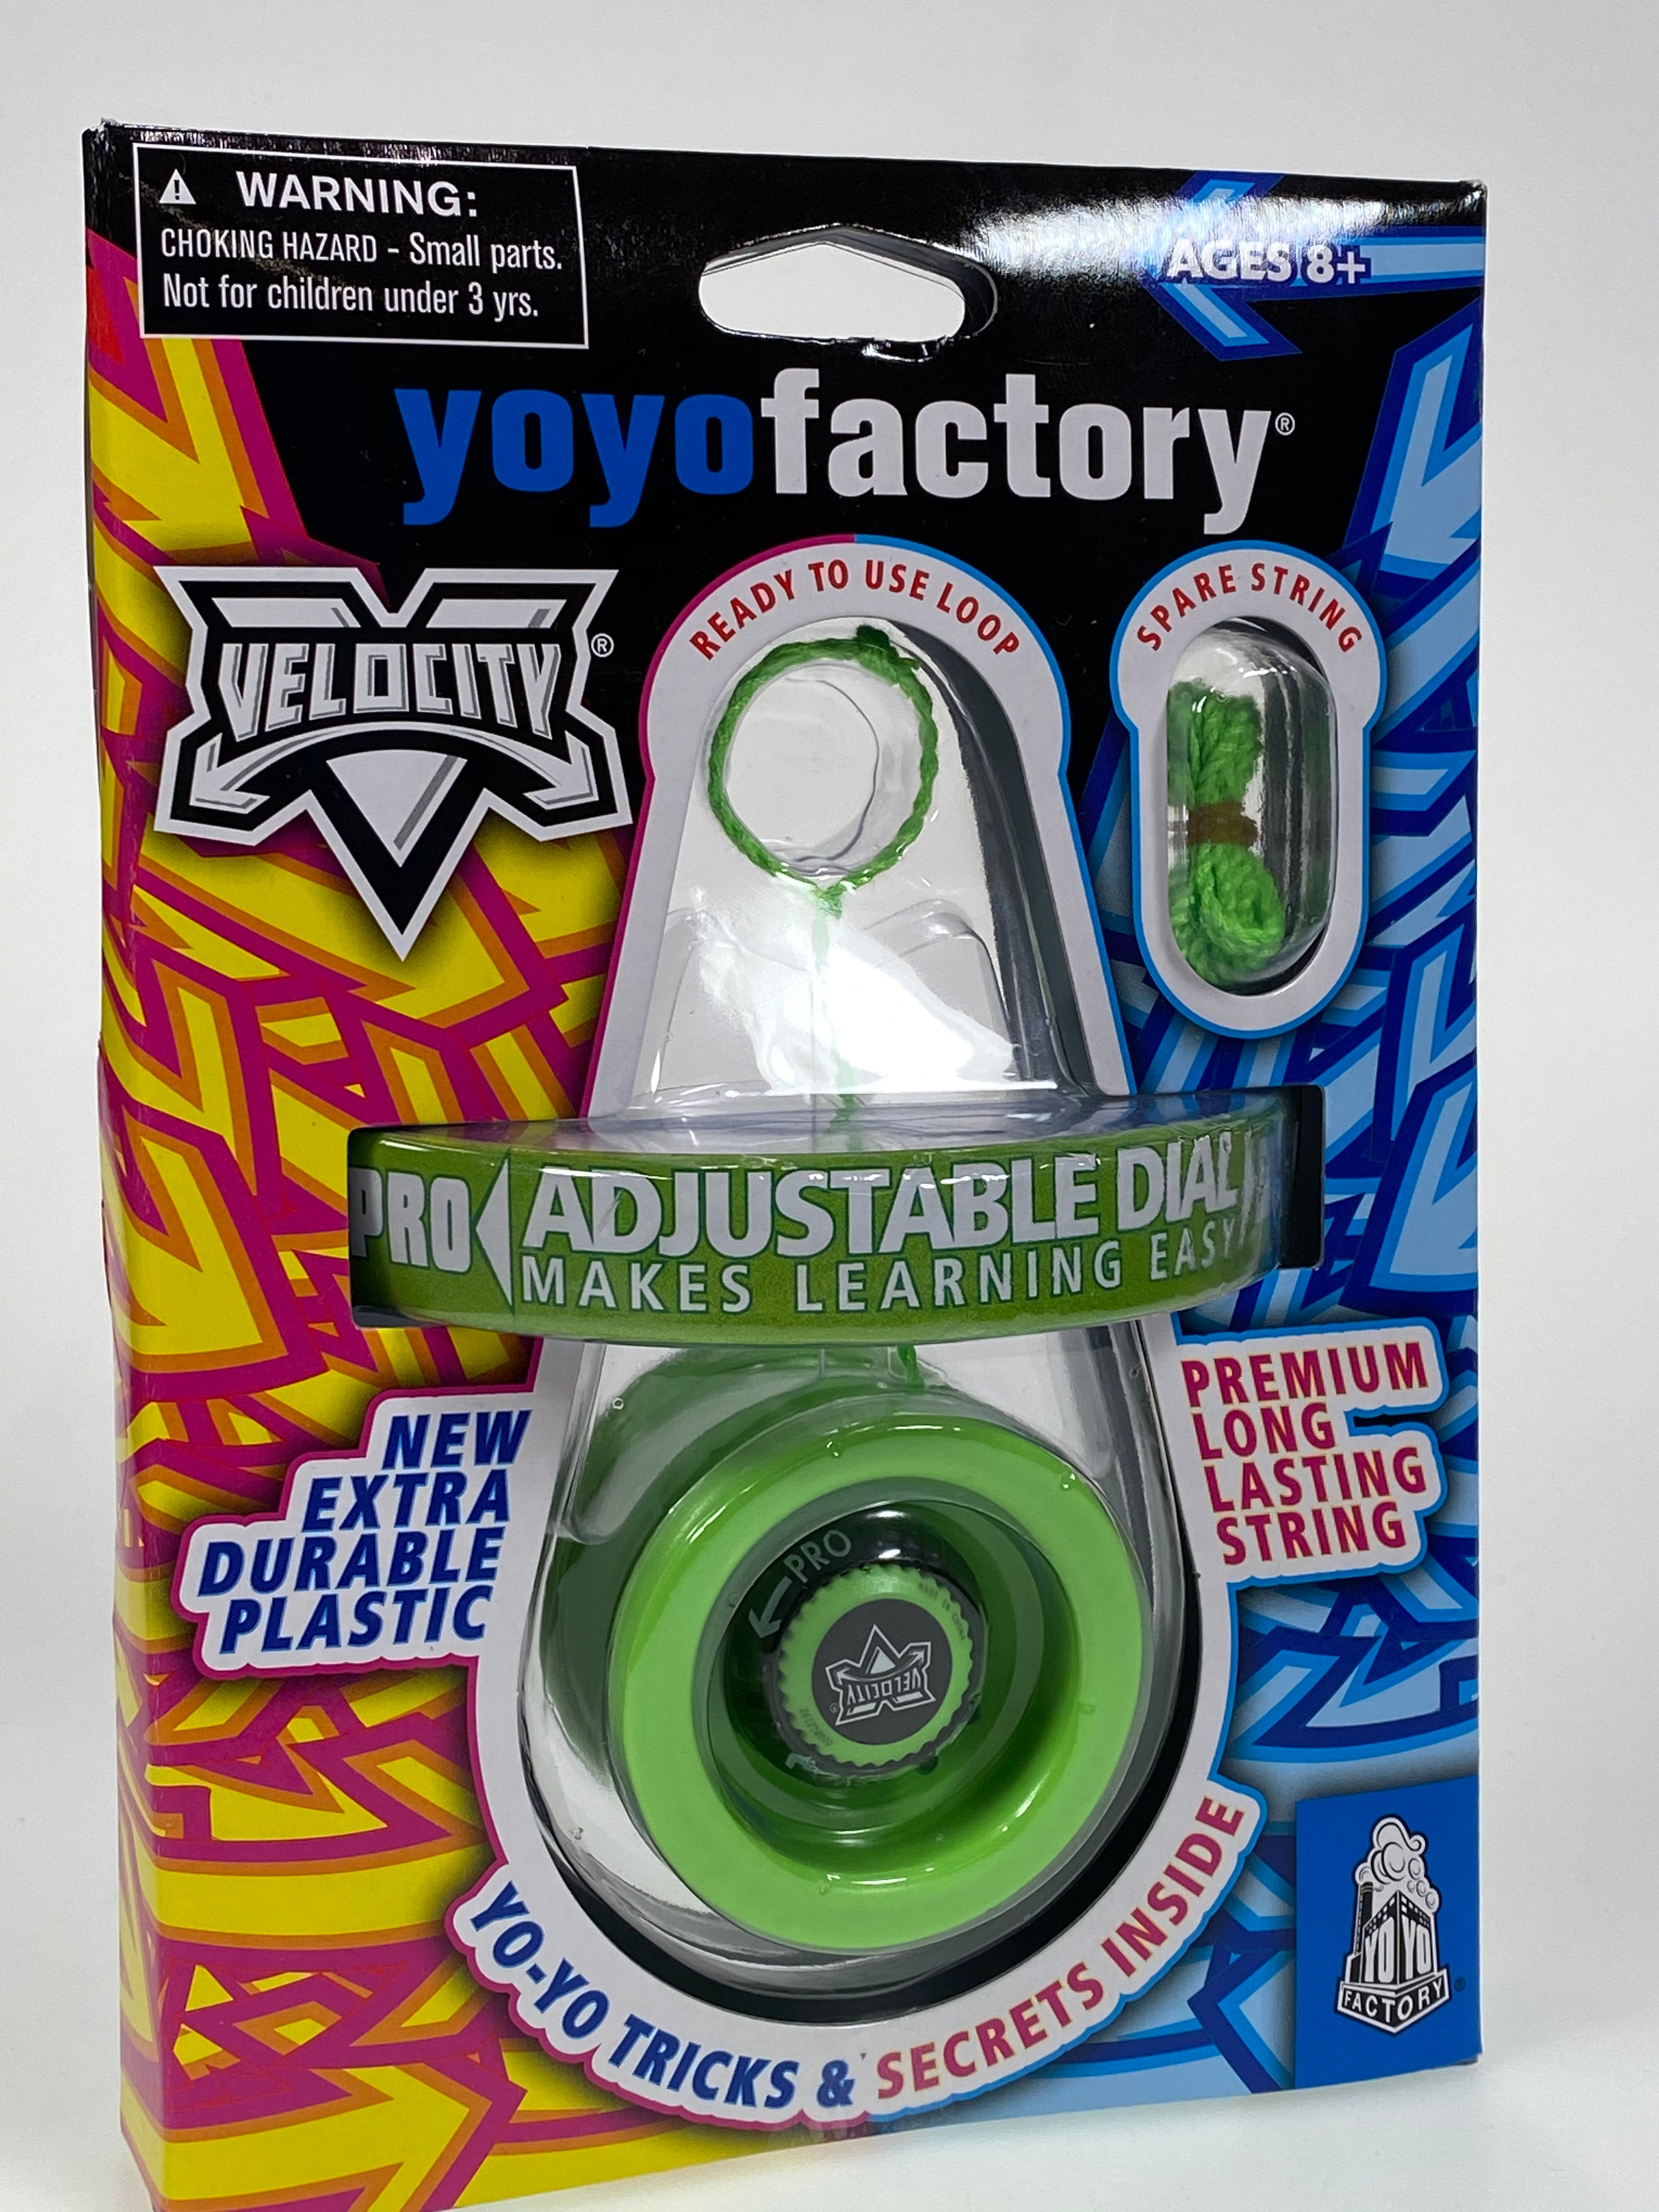 YoYoFactory Velocity Green   320.2645.005